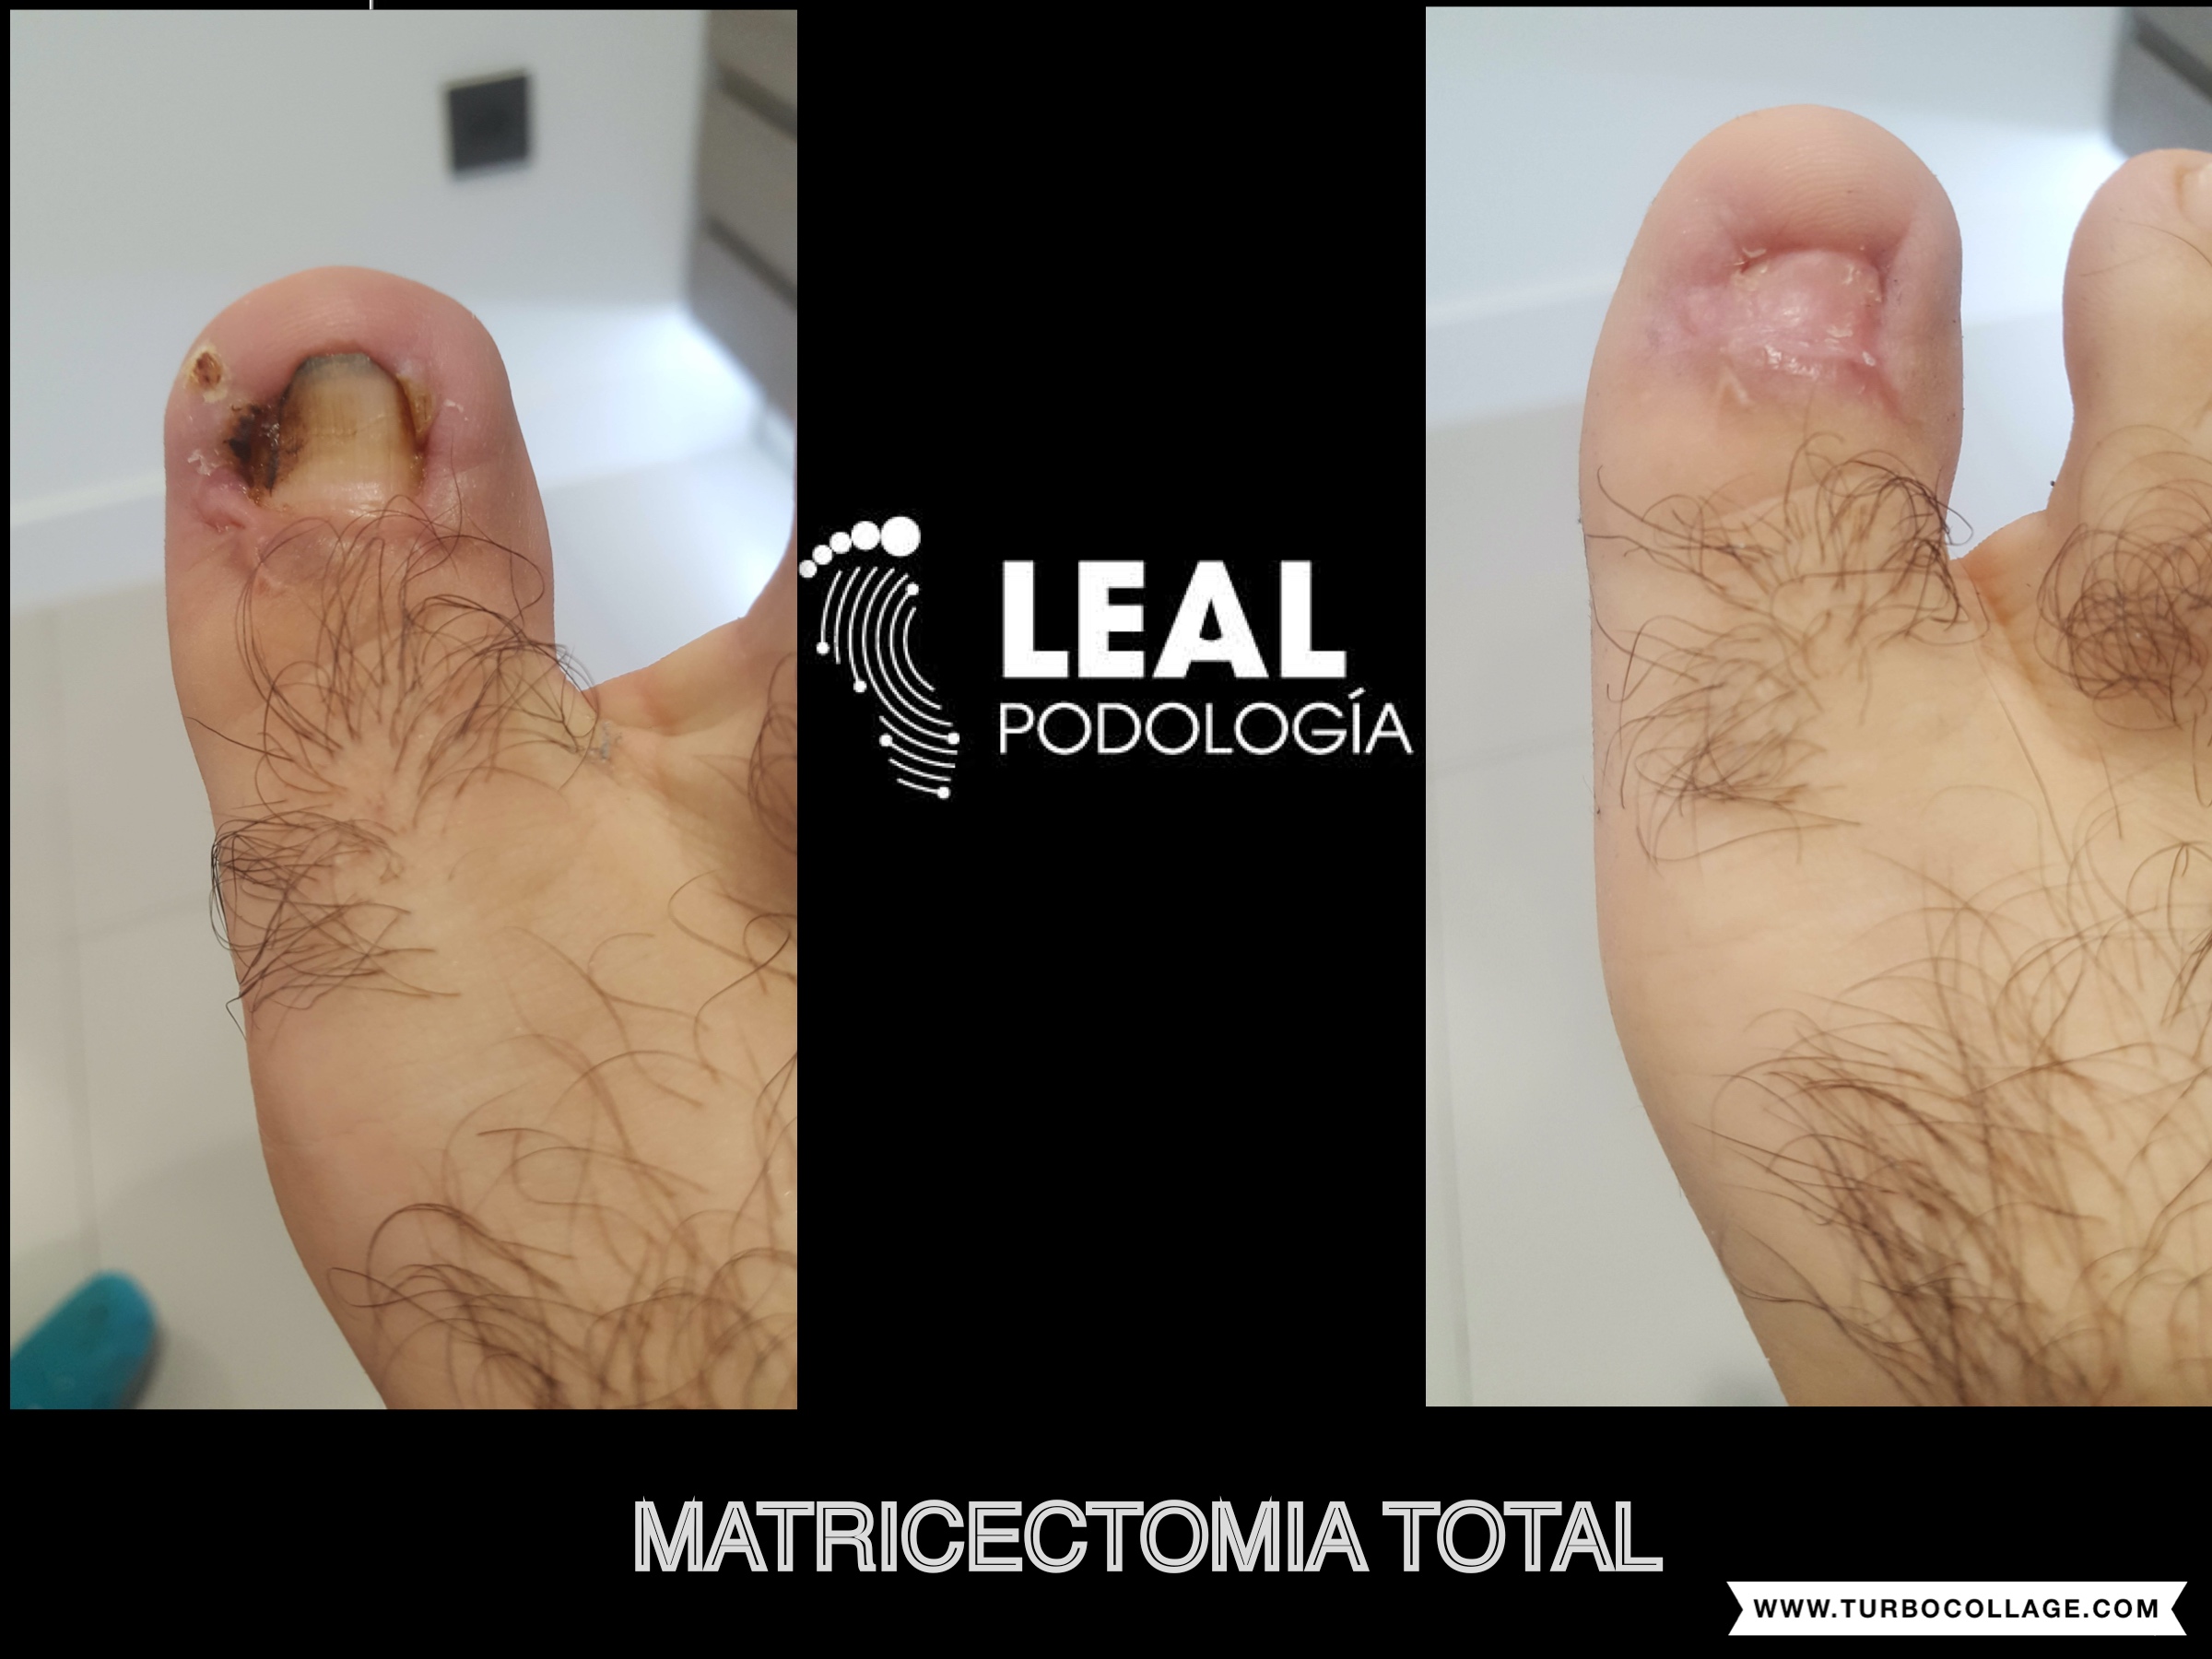 Matricectomia total